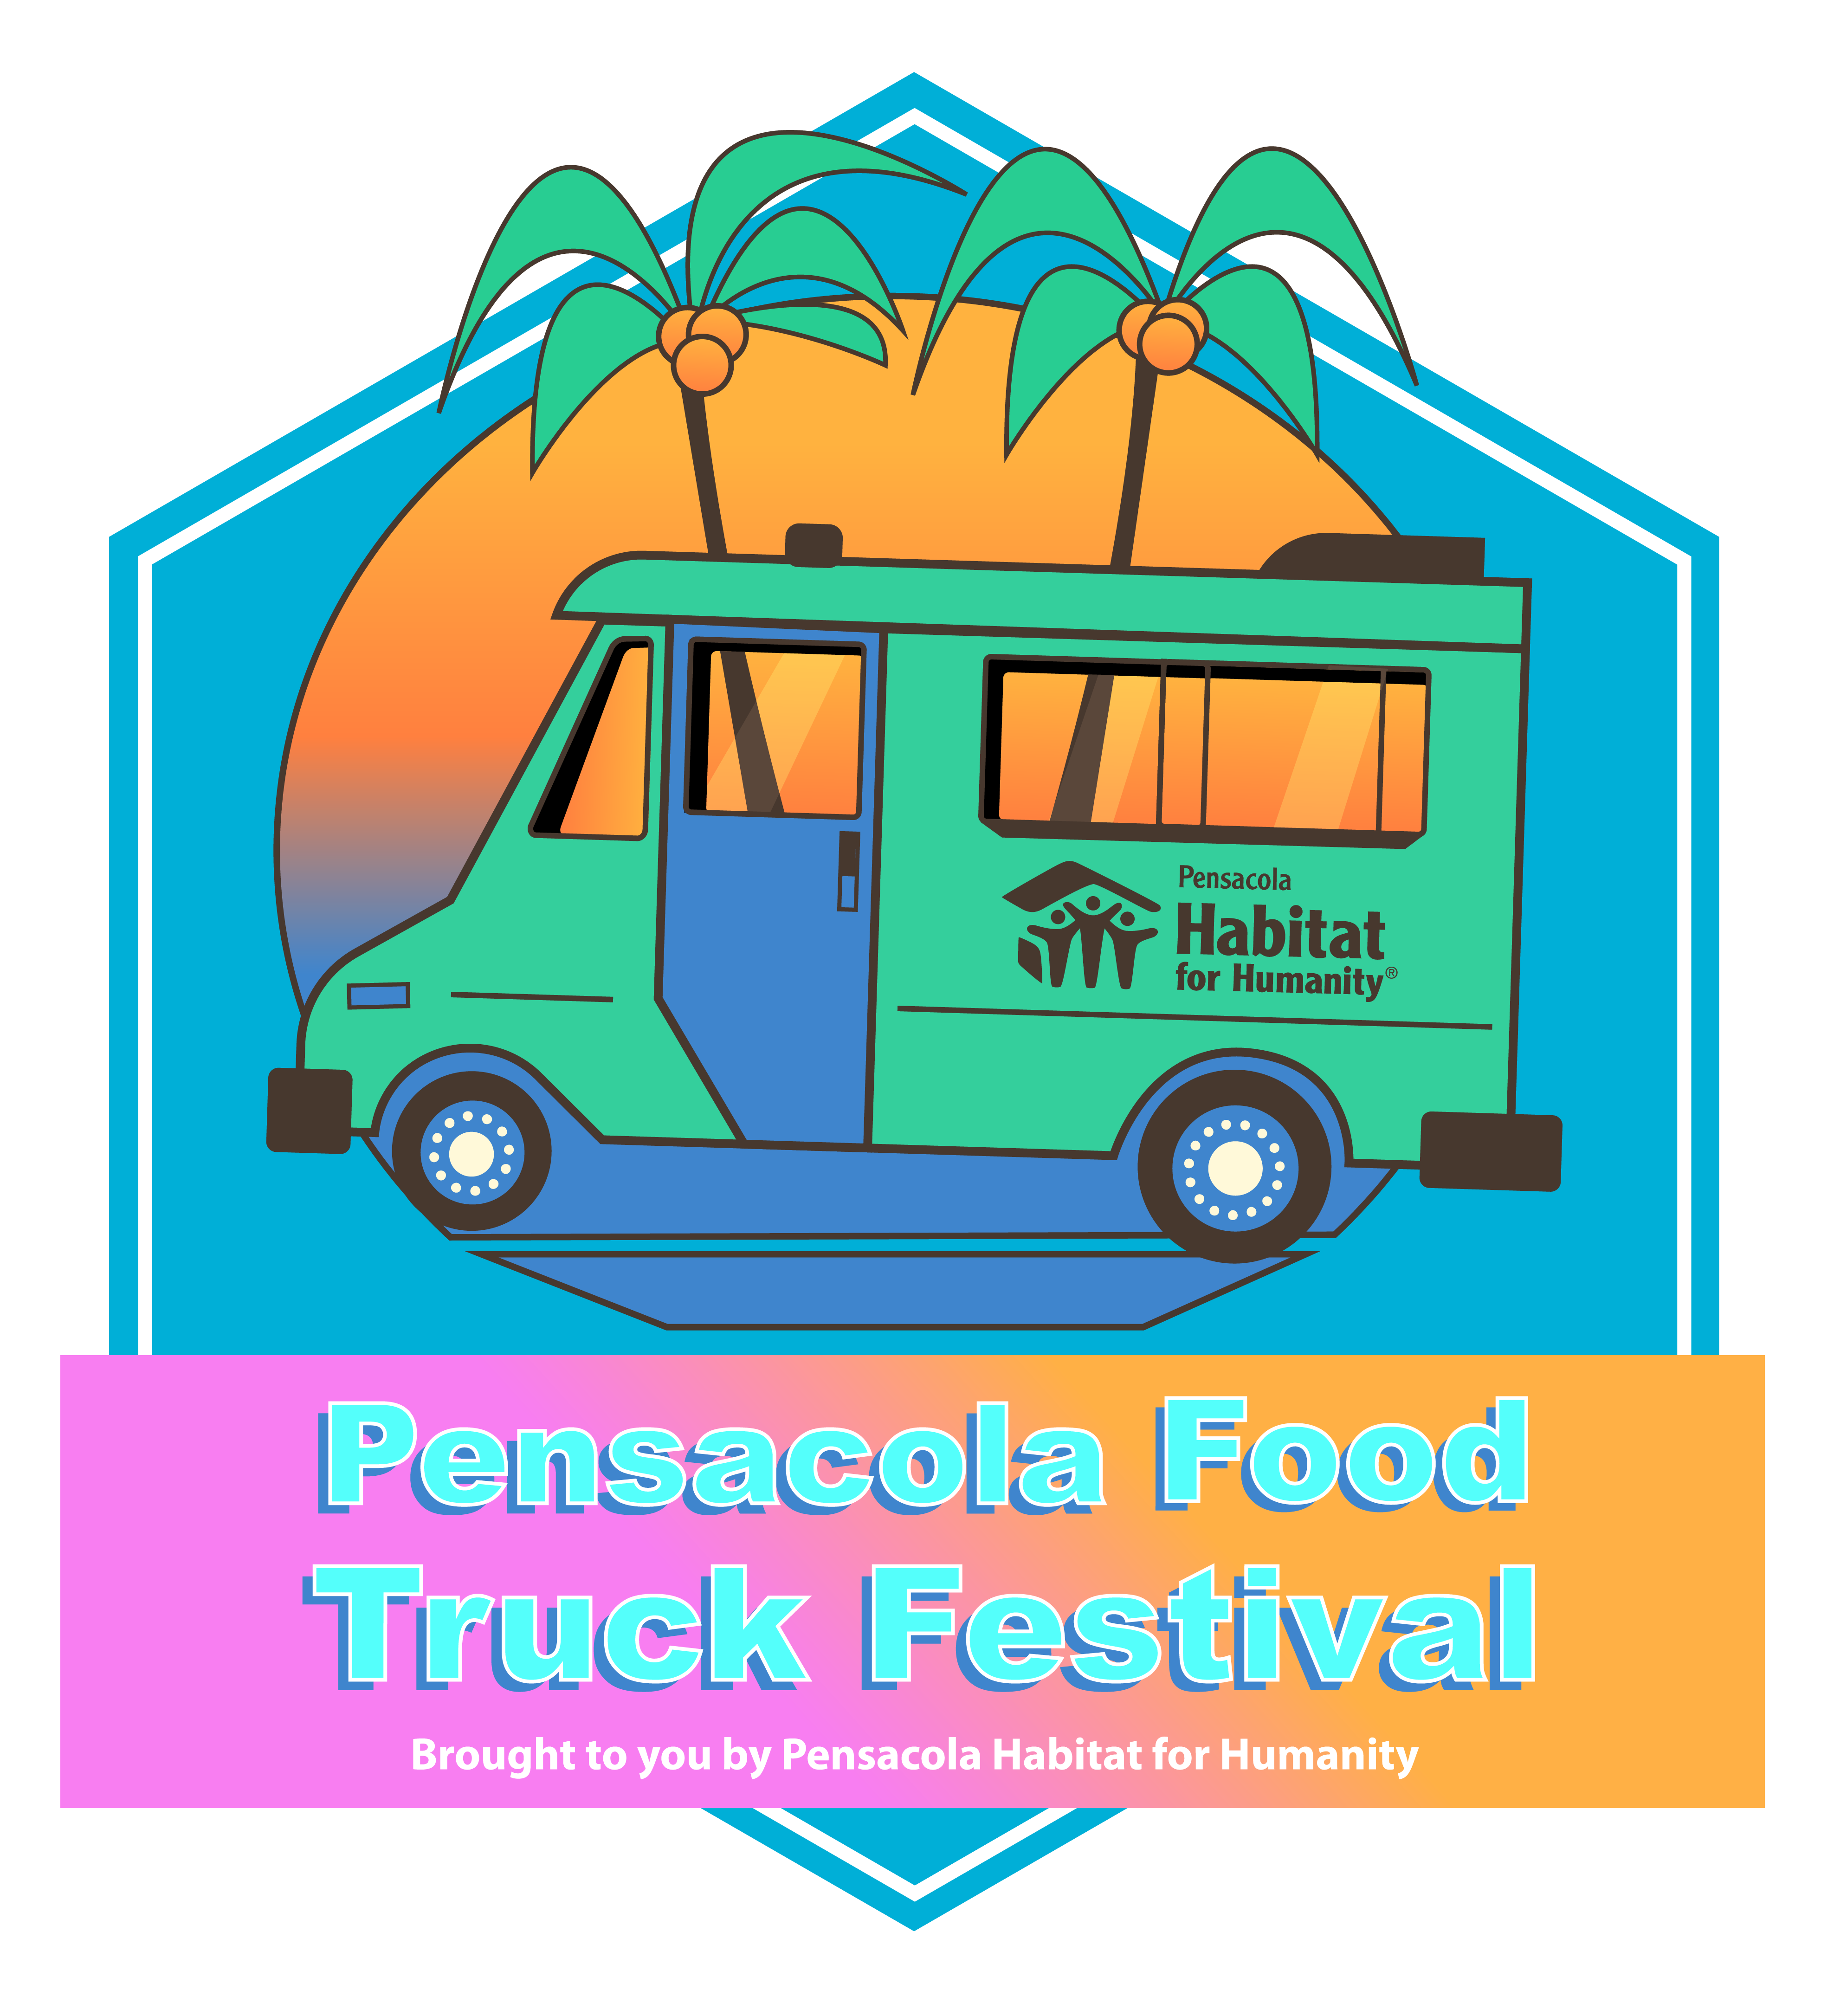 Pensacola Food Truck Festival 2019